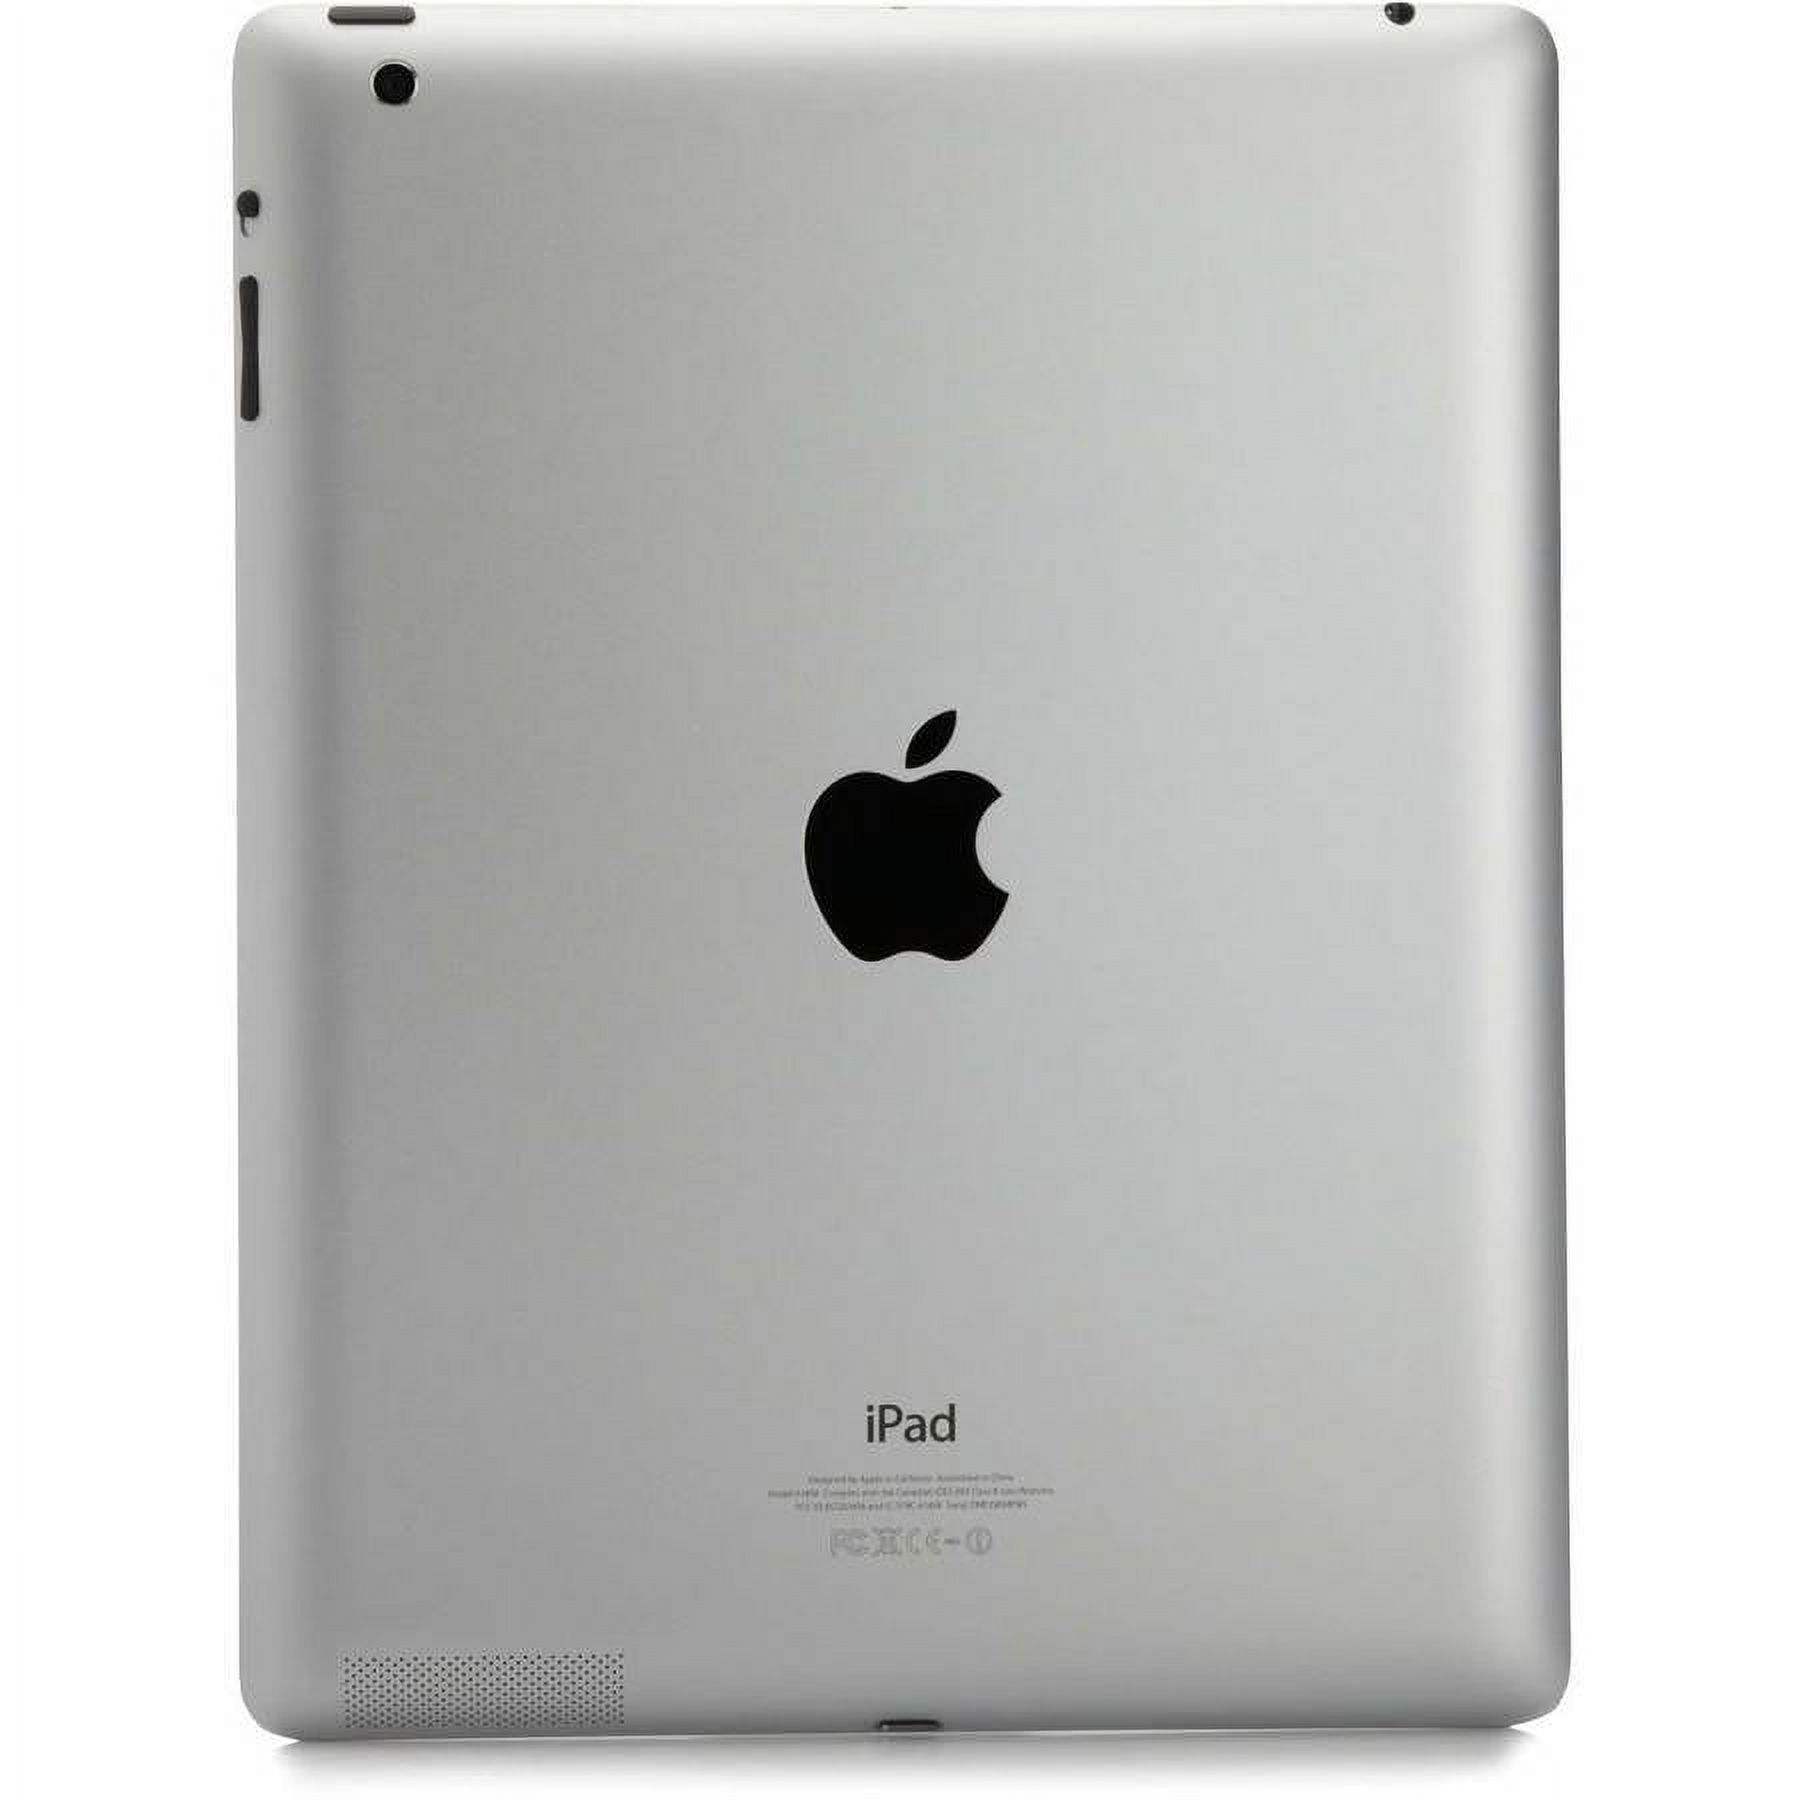 Apple iPad 3rd Gen 16GB White Wi-Fi MD332LL/A - image 4 of 4